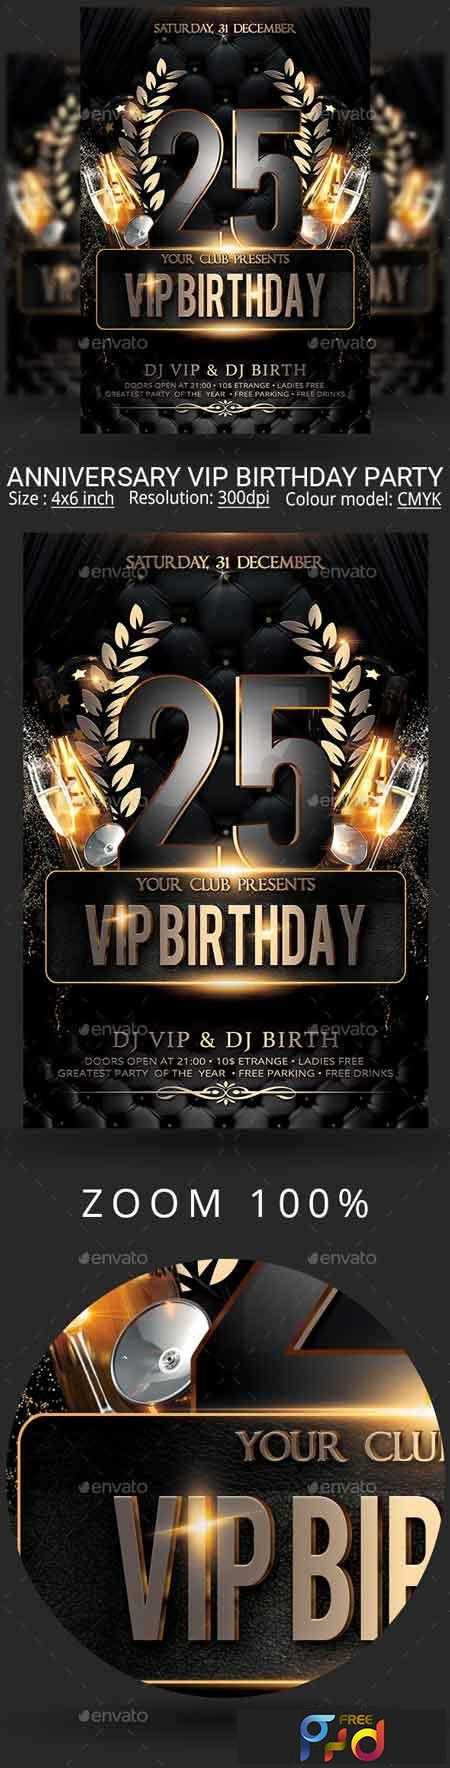 Vip Birthday Anniversary Party Flyer